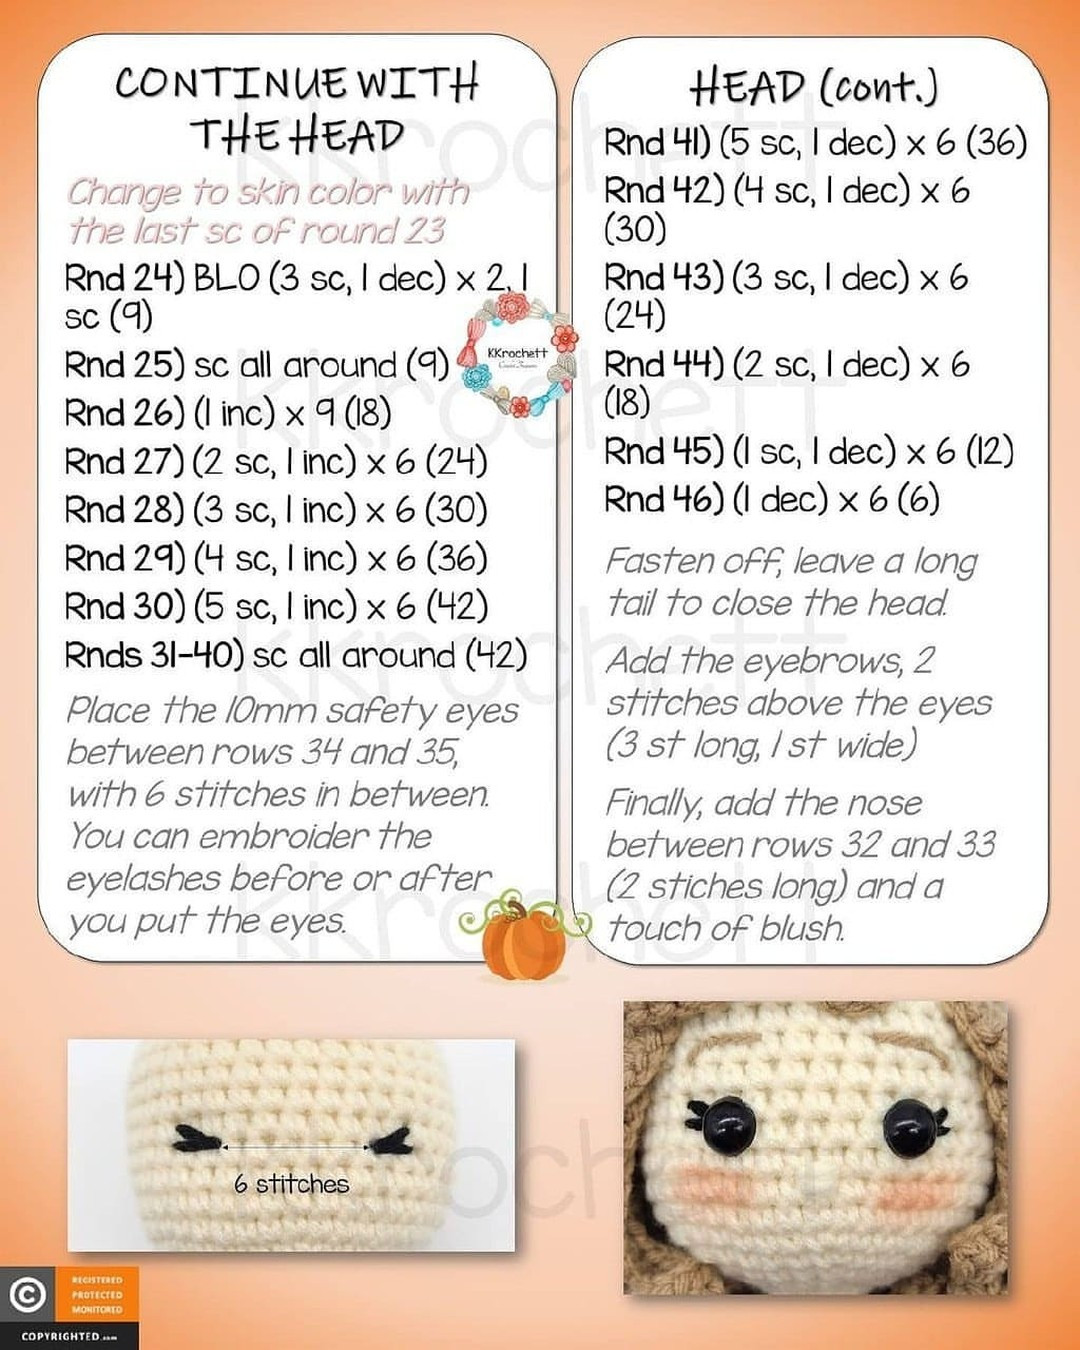 free crochet pattern ashley doll